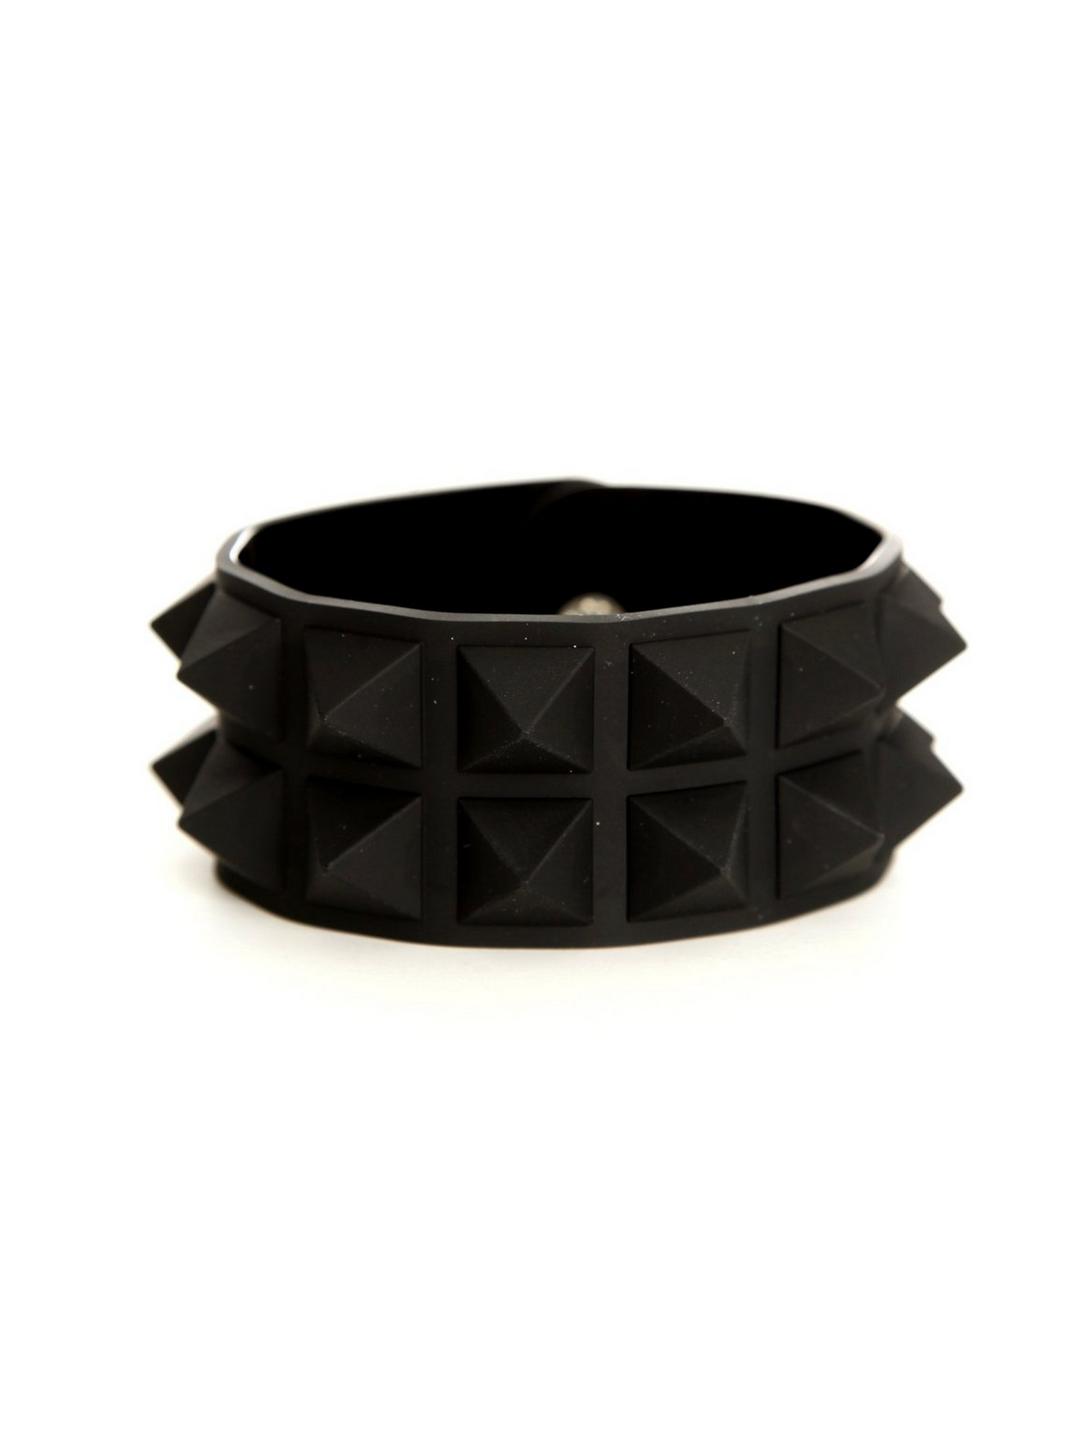 Black Rubber Pyramid Spike Wrist Cuff, , hi-res